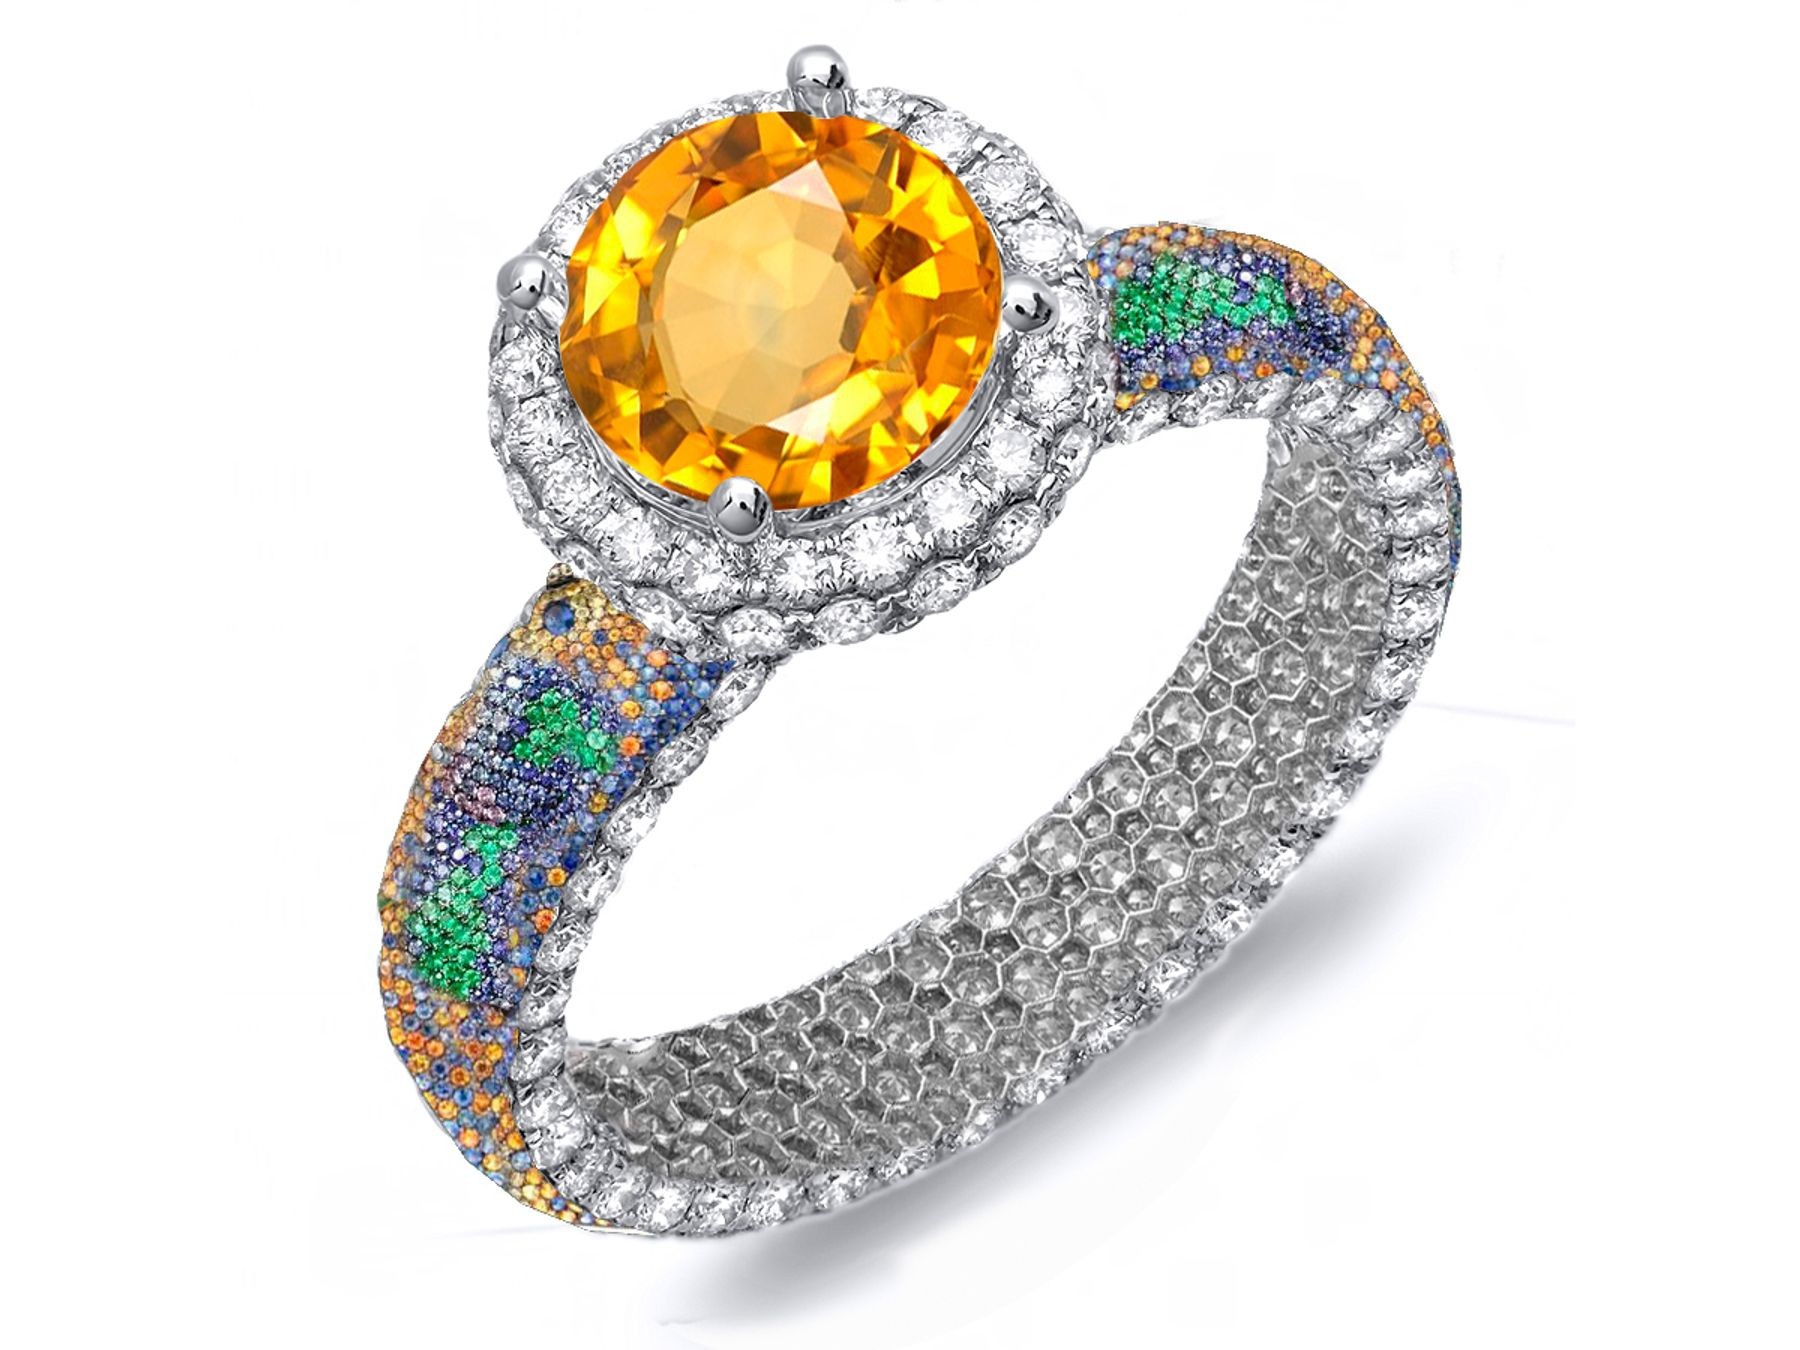 Brilliant & Rich Pave Cluster Diamond & Multi-Colored Precious Stones Rubies, Emeralds & Blue, Pink, Purple, Yellow Sapphires